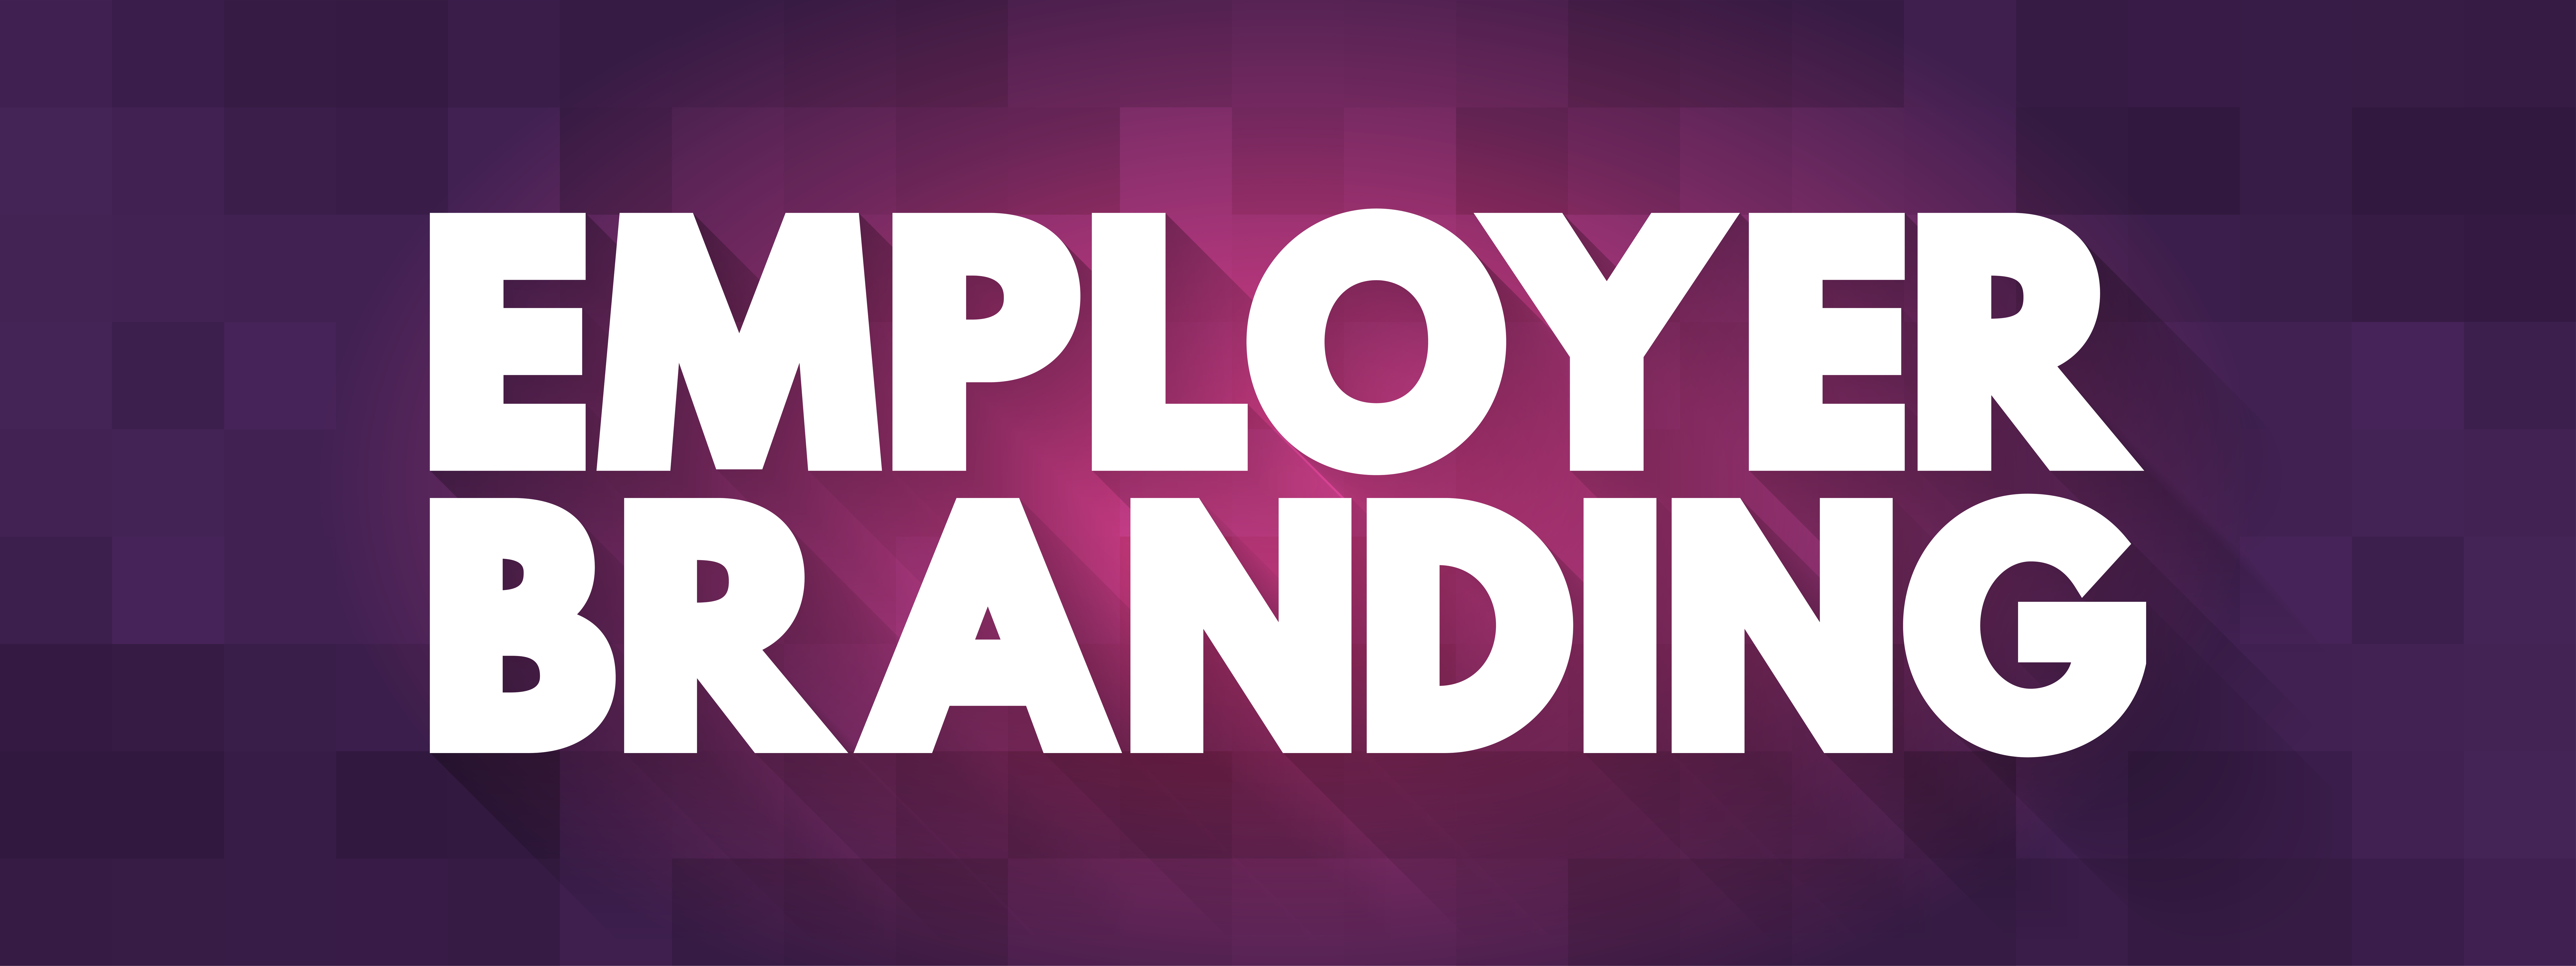 employer branding for remote workforces